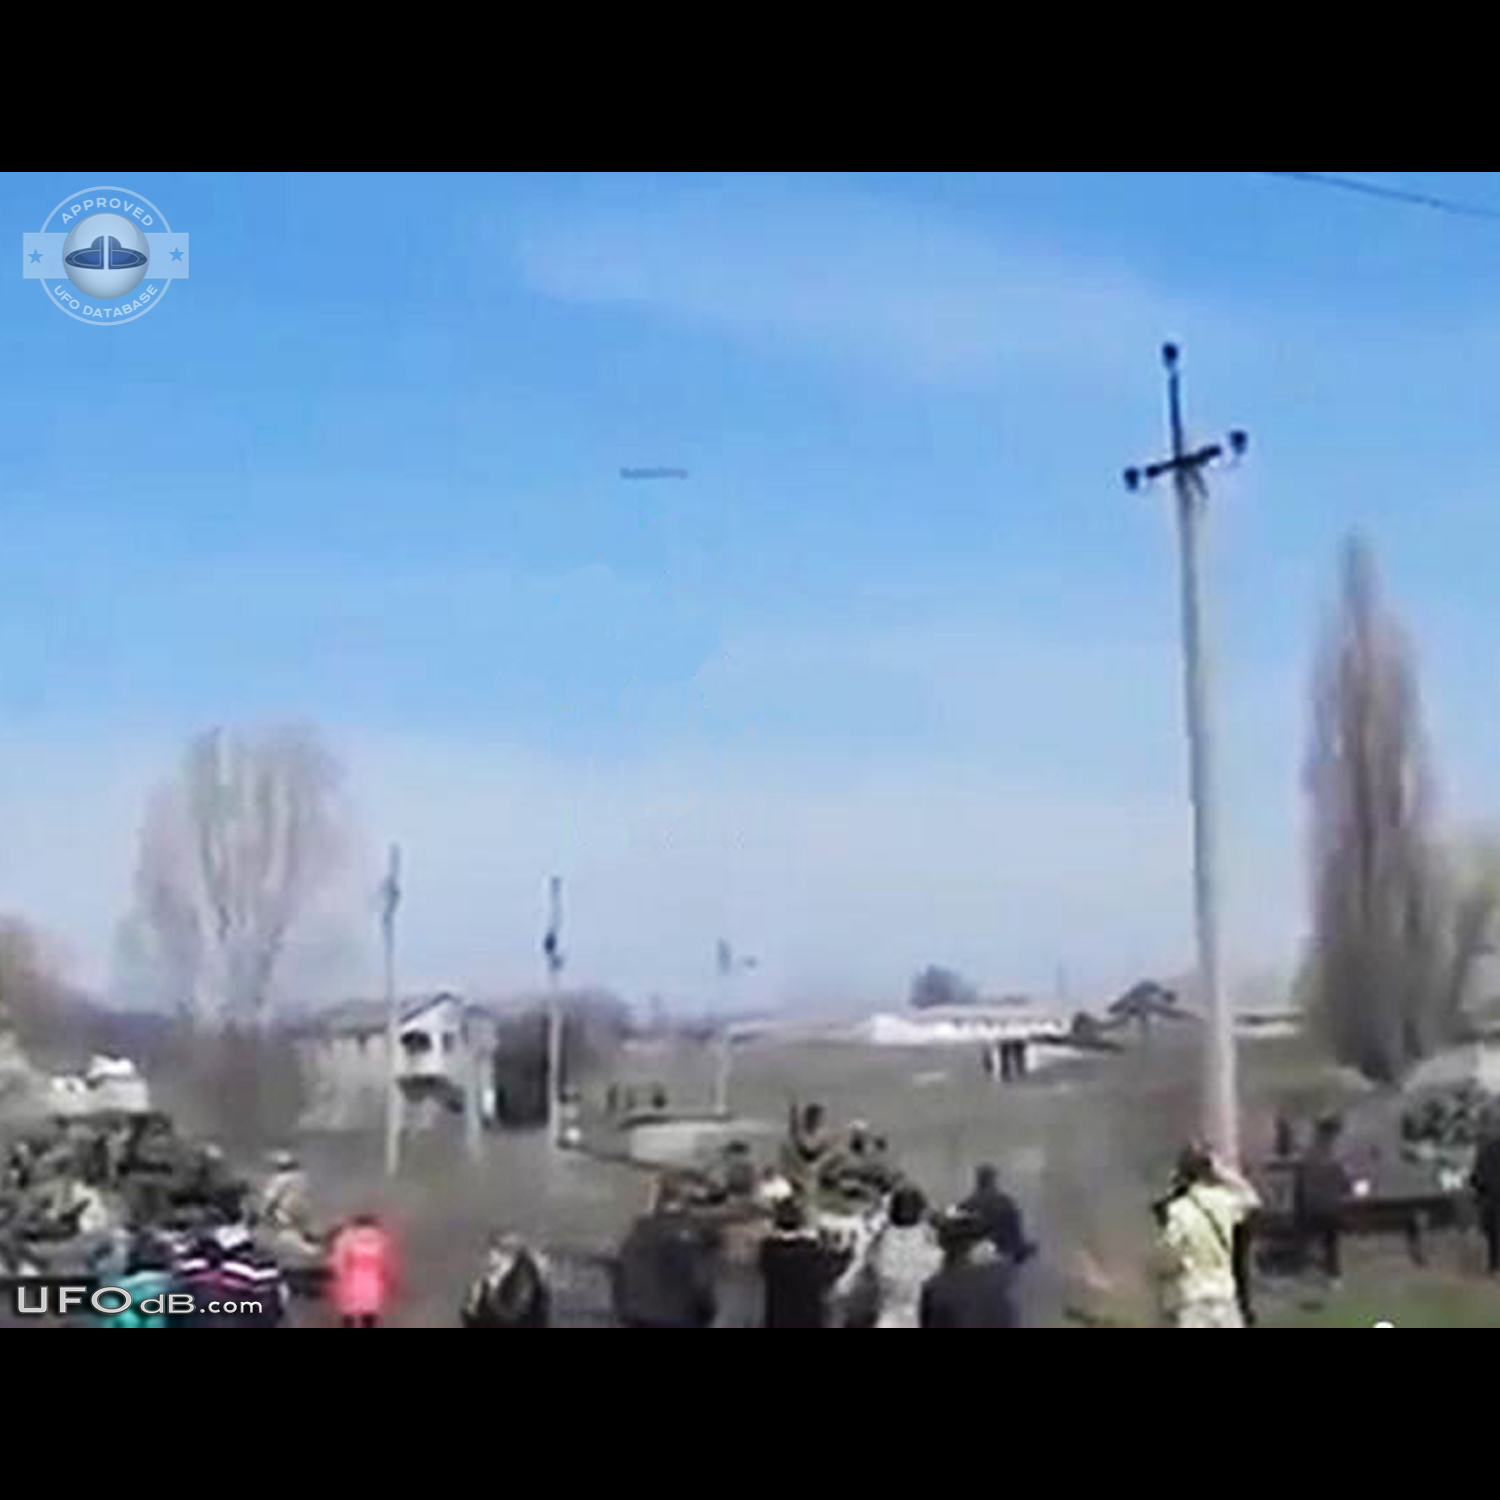 300 M Cylinder UFO Sky Dreadnaught near Russia/Ukraine Conflict - 2014 UFO Picture #559-2